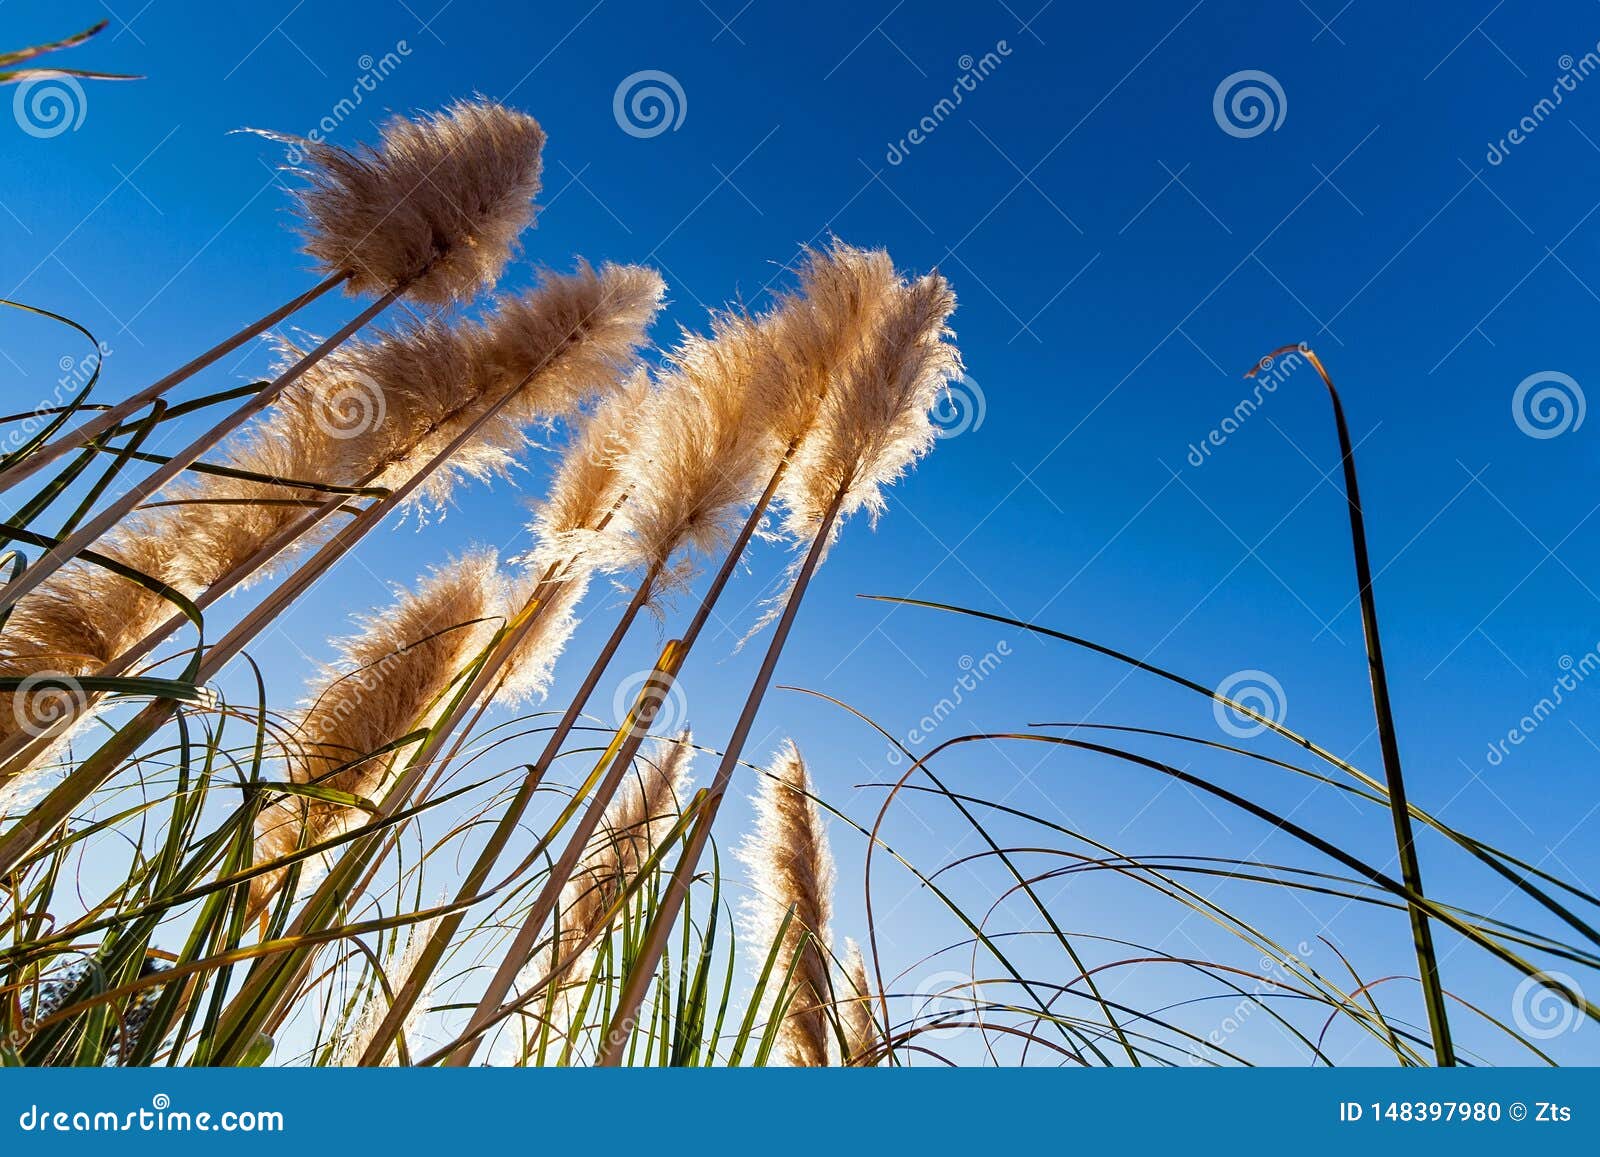 pampas grass aka cortaderia selloana silhouette or backlit